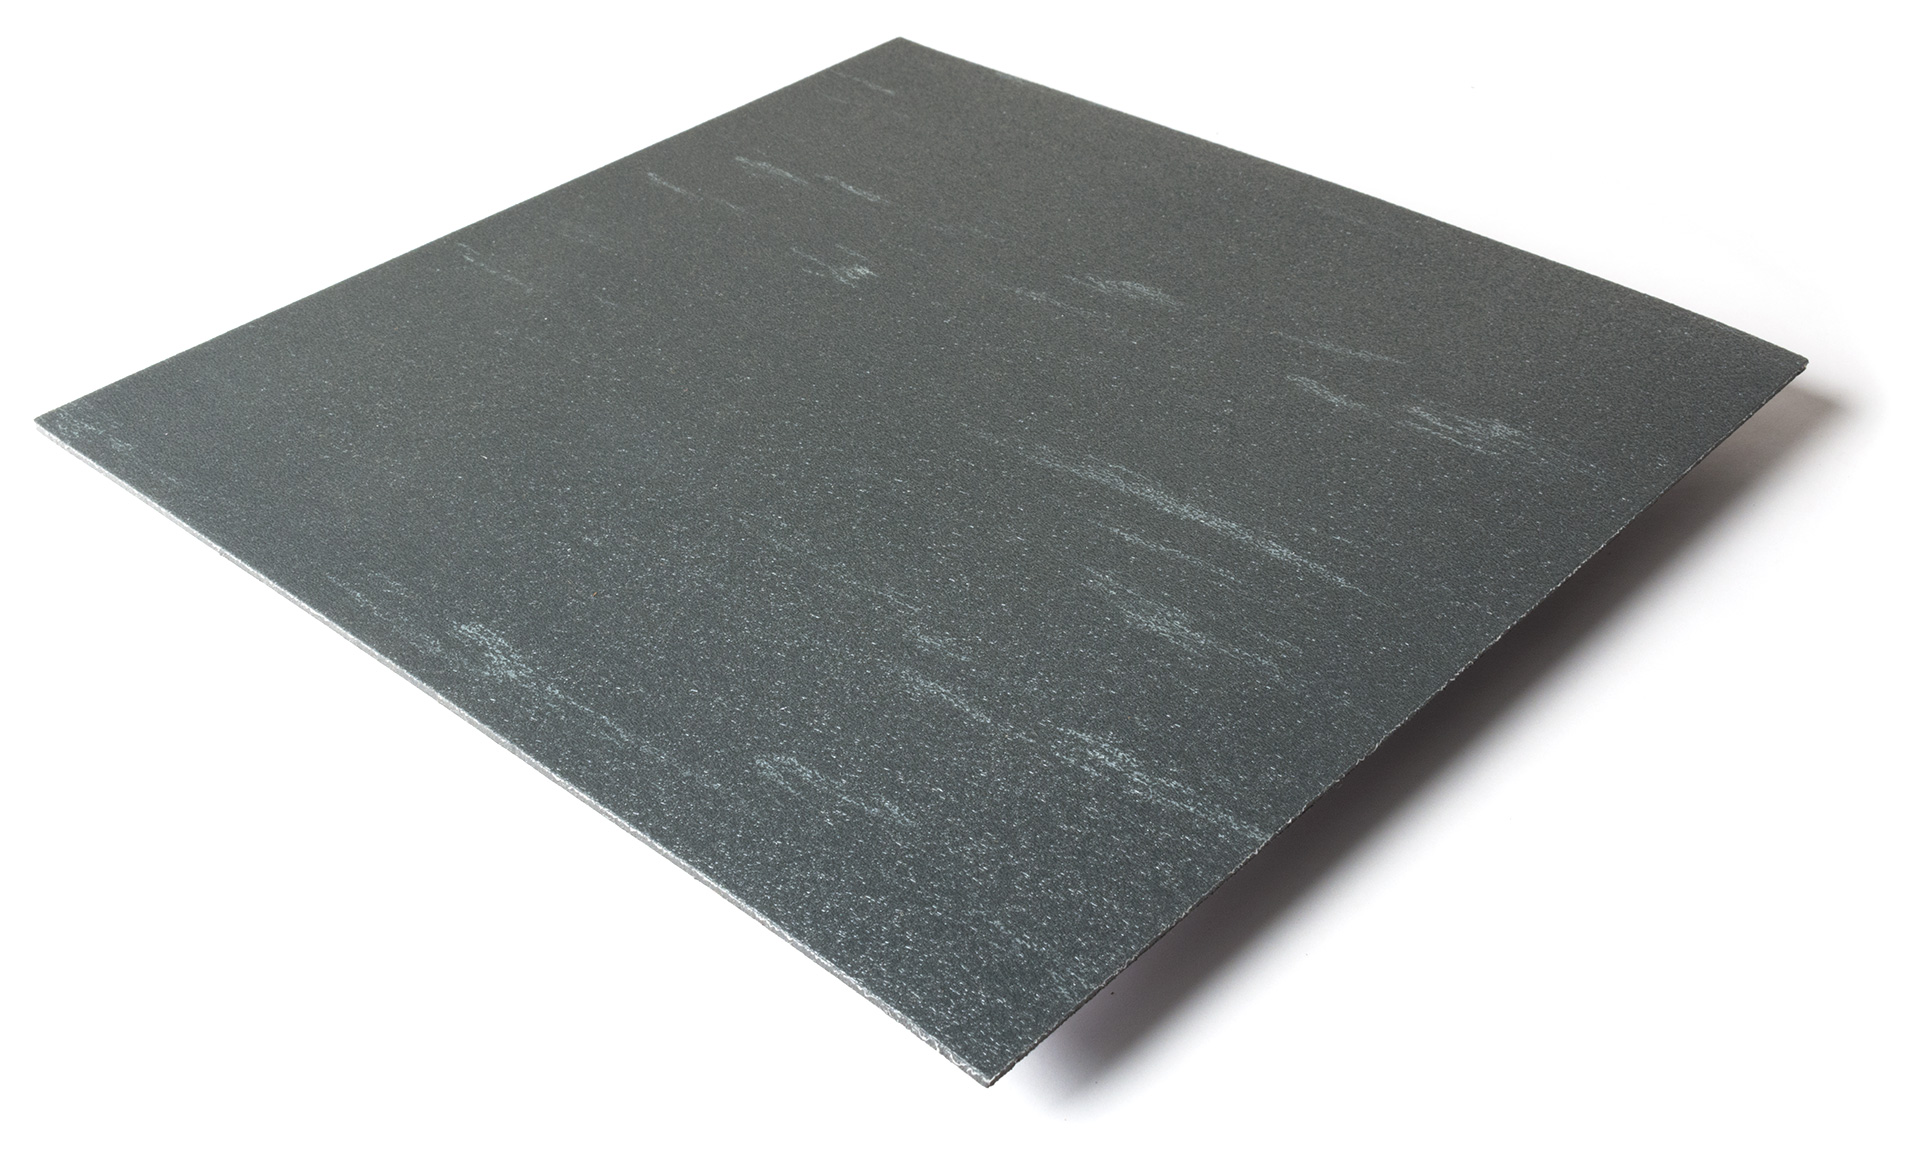 Standard transit flooring in DS marbled dark gray, smooth